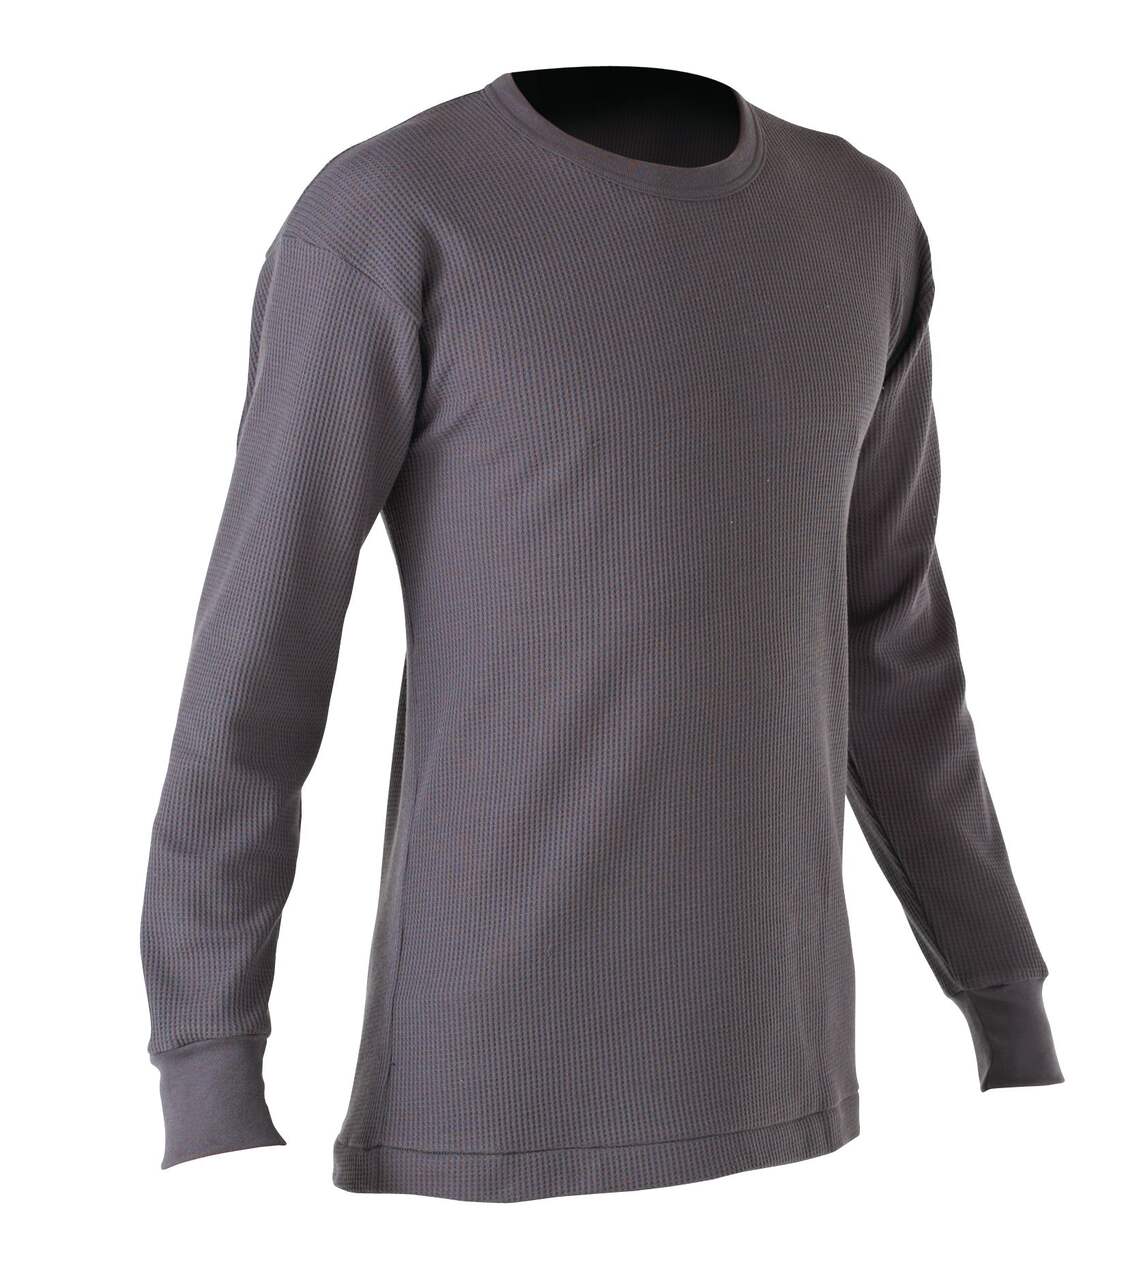 Bayside Heavyweight 7.5 oz. Waffle Knit Thermal Long Sleeve with Cuff  Sweatshirt